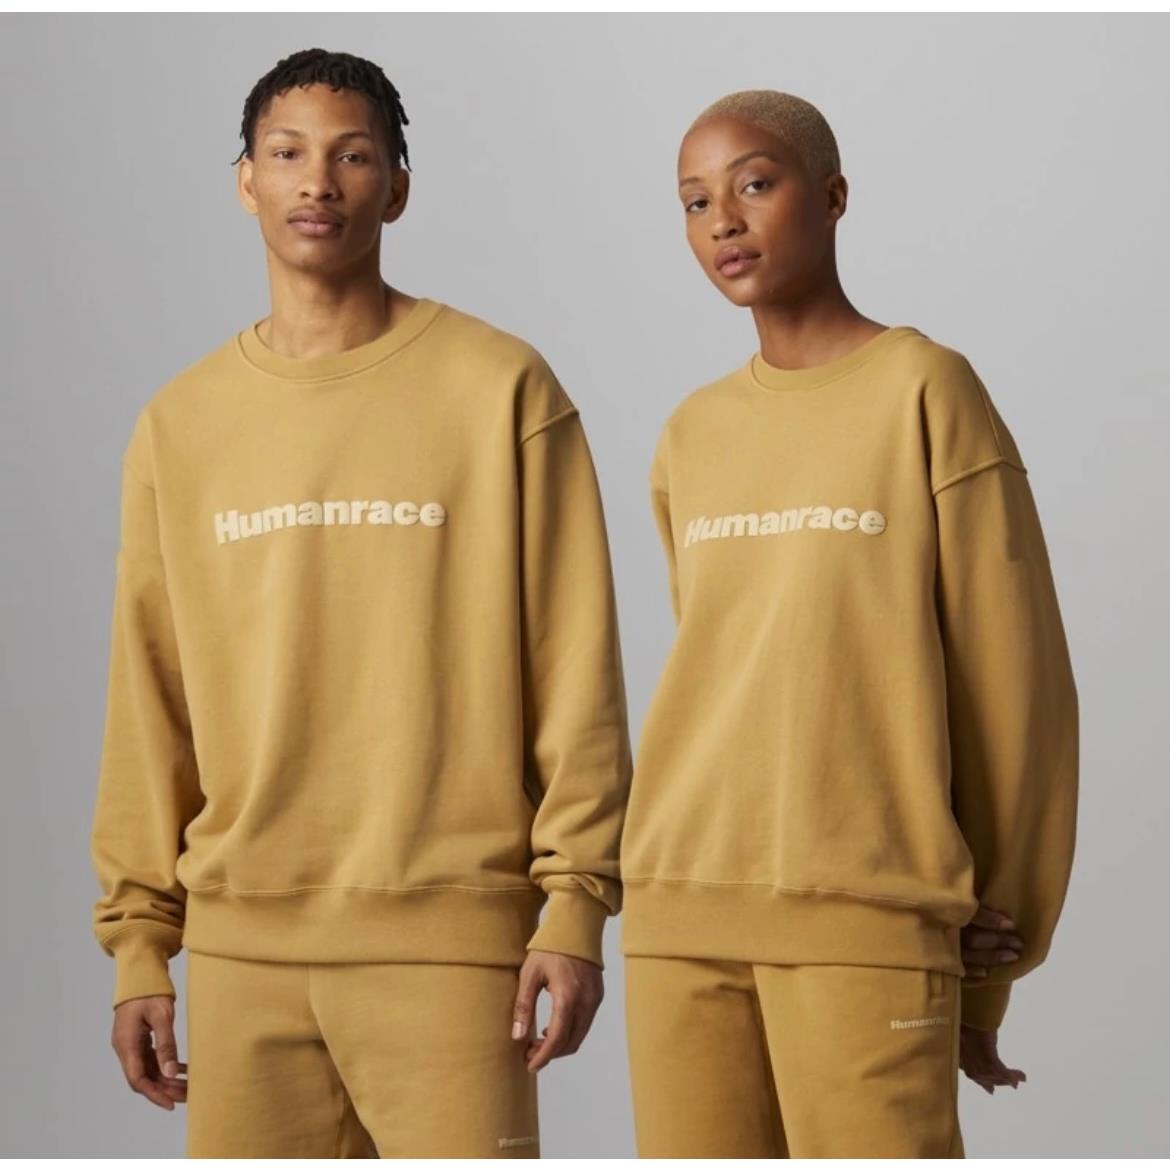 Adidas x Humanrace By Pharrell Williams Basics Sweatshirt HI5542 S.m.xl Was$110